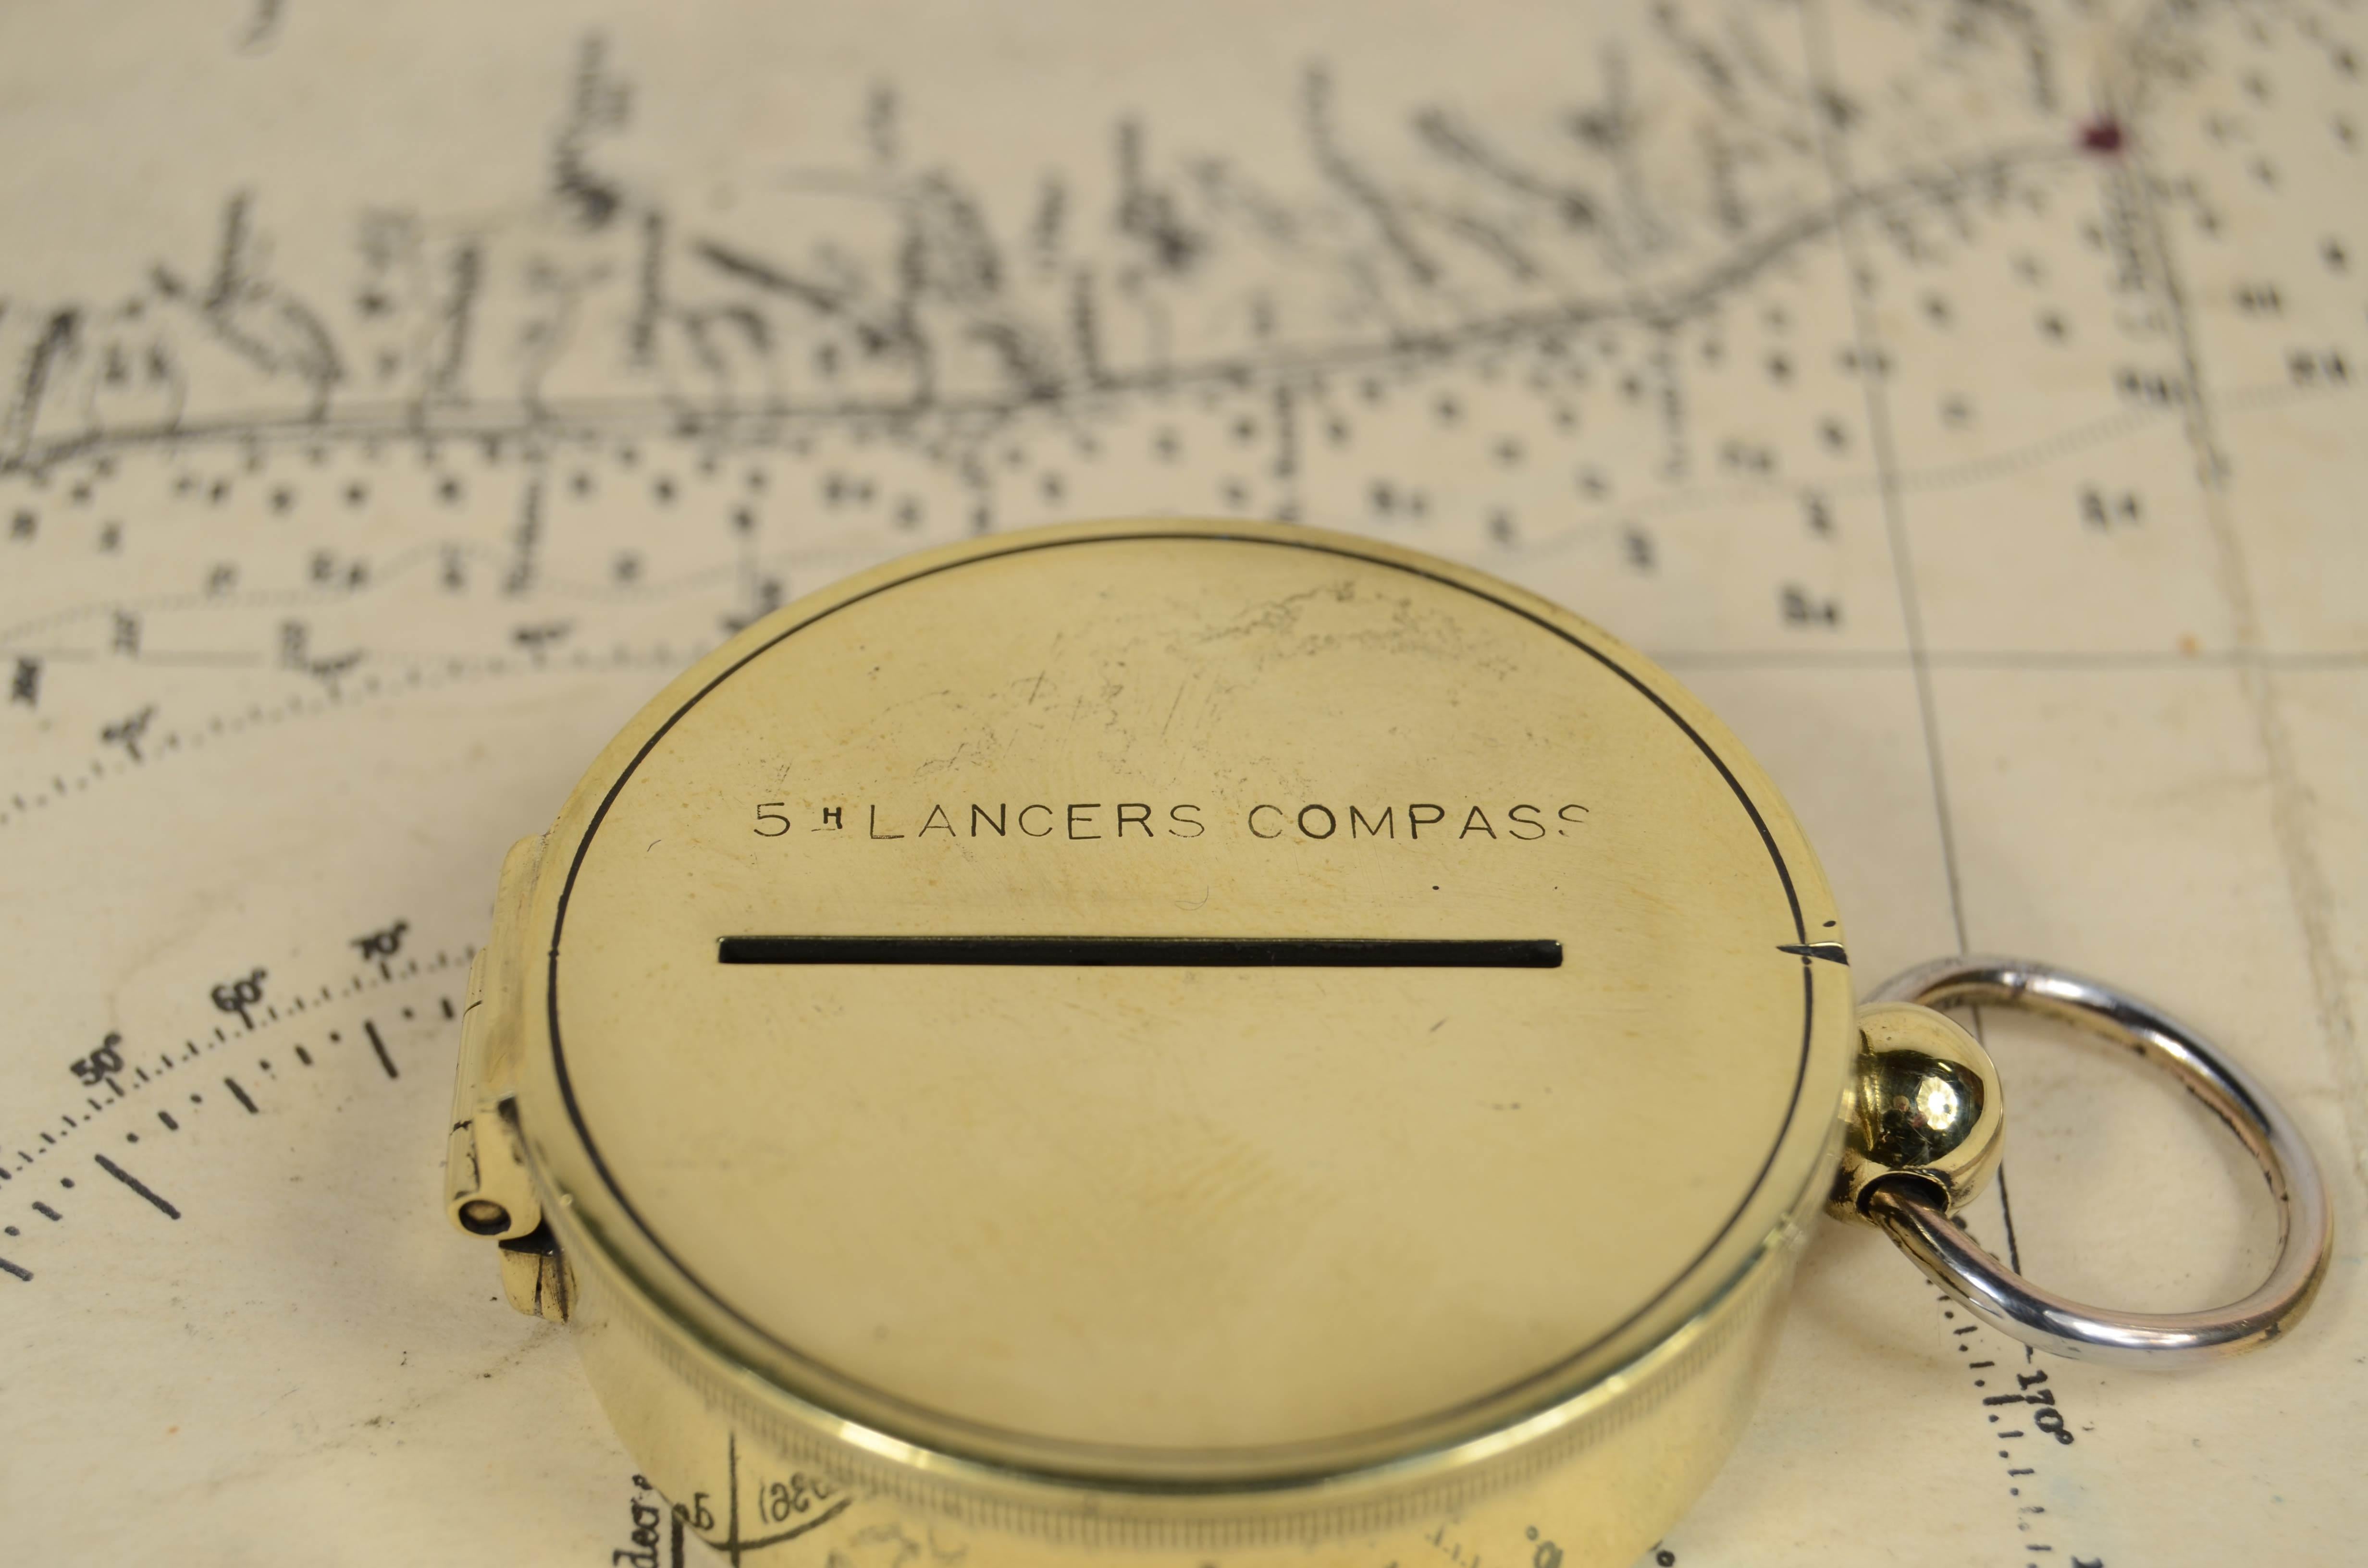 Bussola nautica da tasca in ottone, firmata 5m LANCERS COMPASS. Inghilterra 1920 For Sale 4